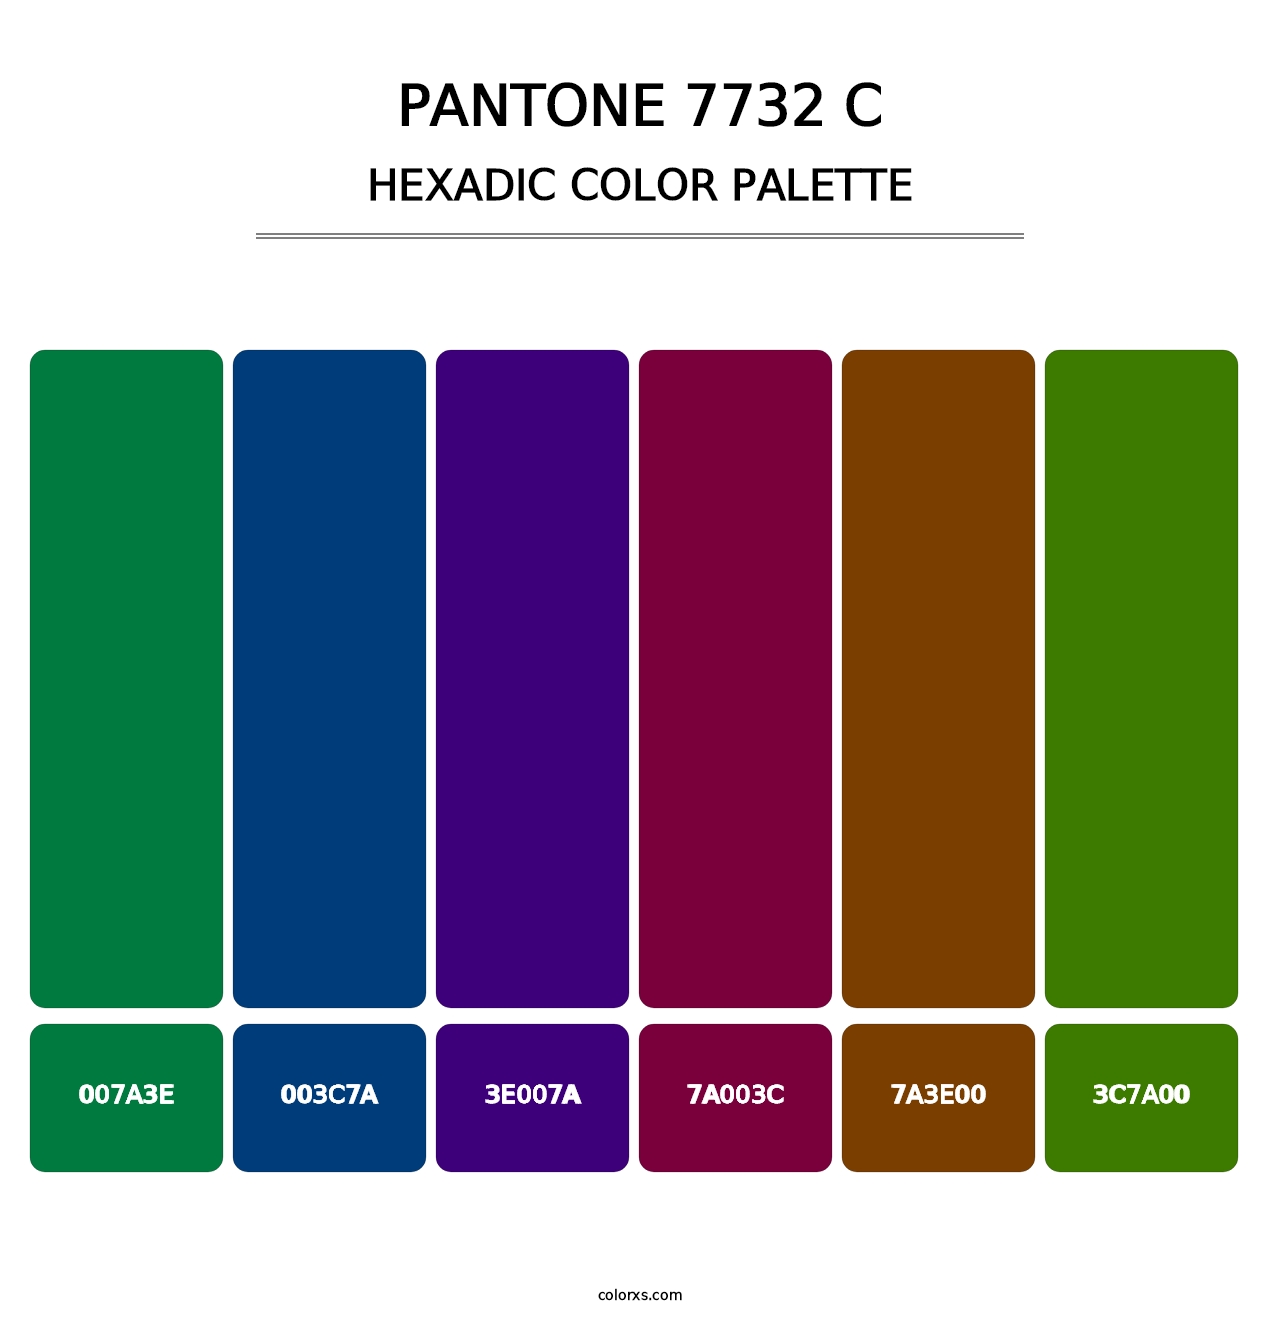 PANTONE 7732 C - Hexadic Color Palette